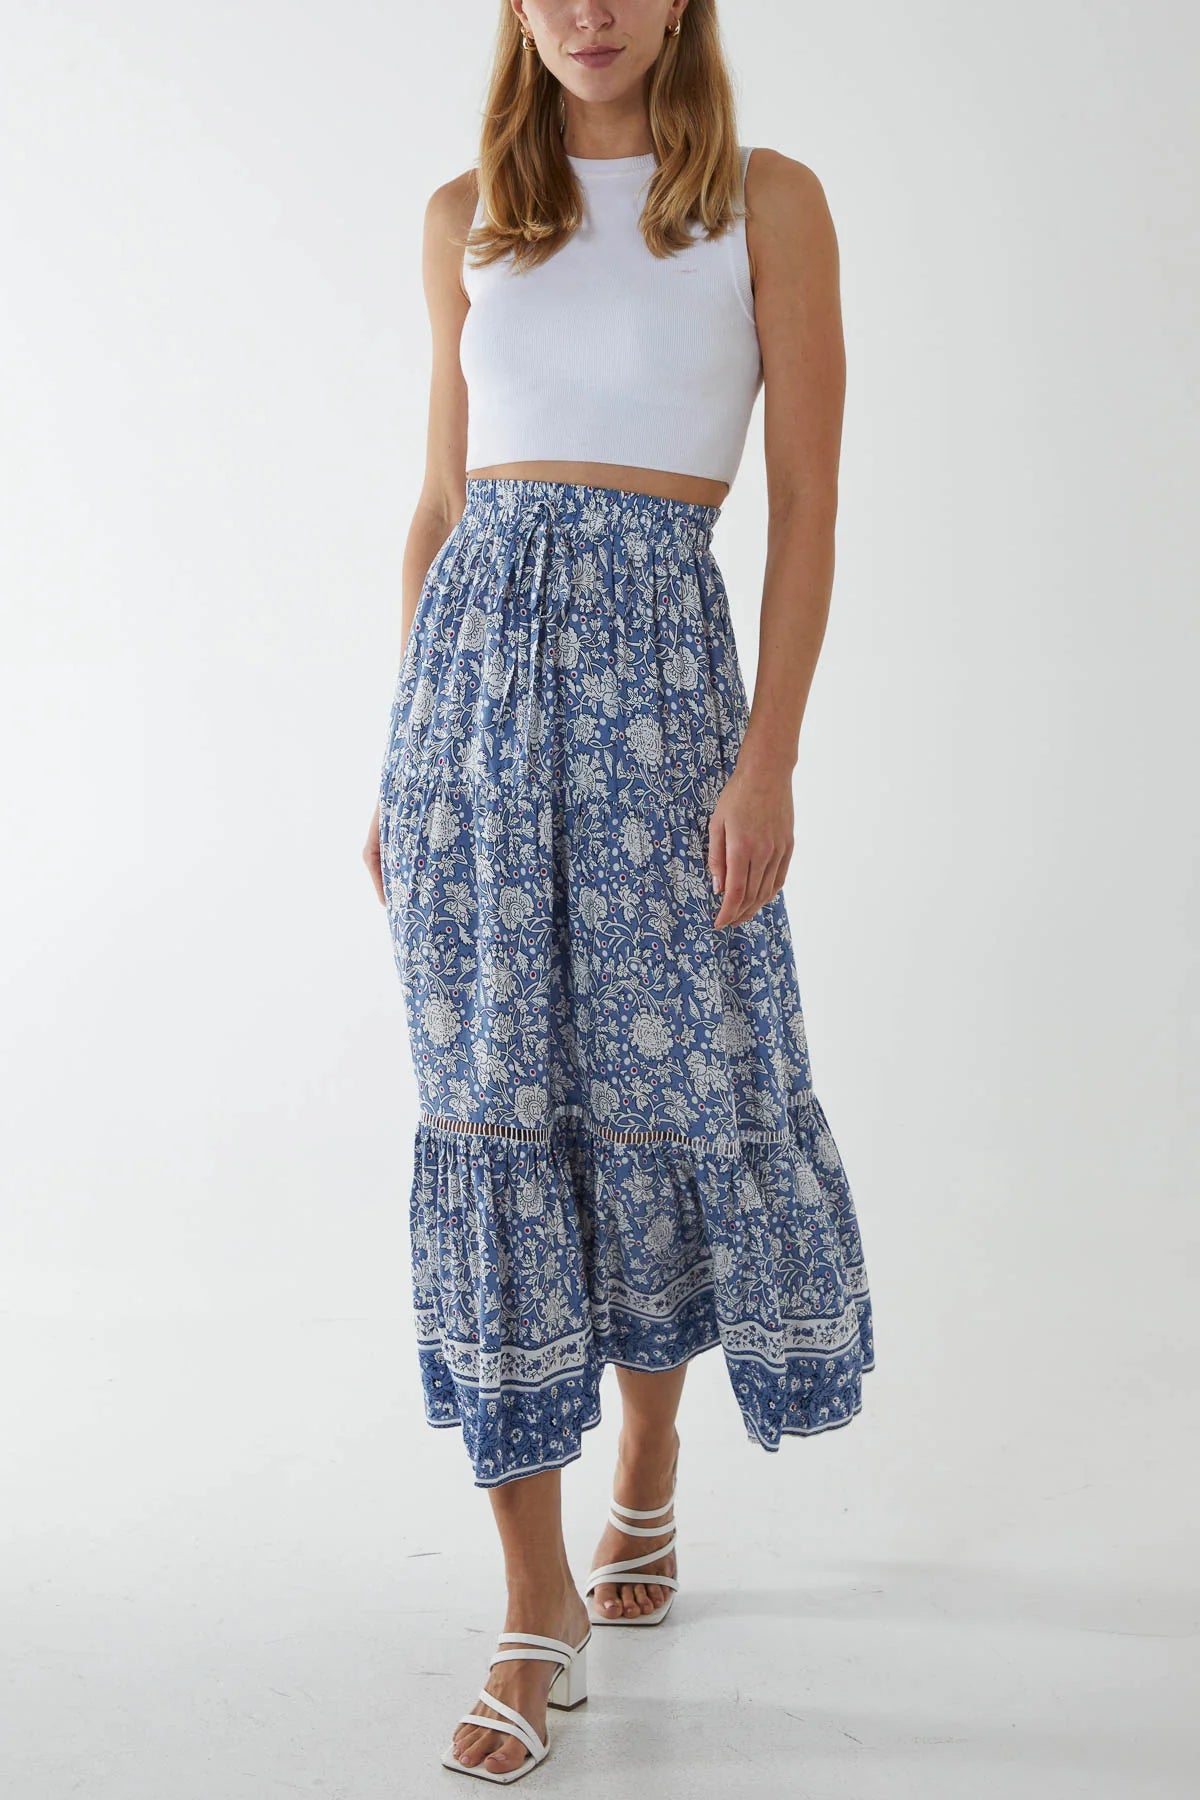 Tessa - Tiered Maxi Skirt - Blue/White